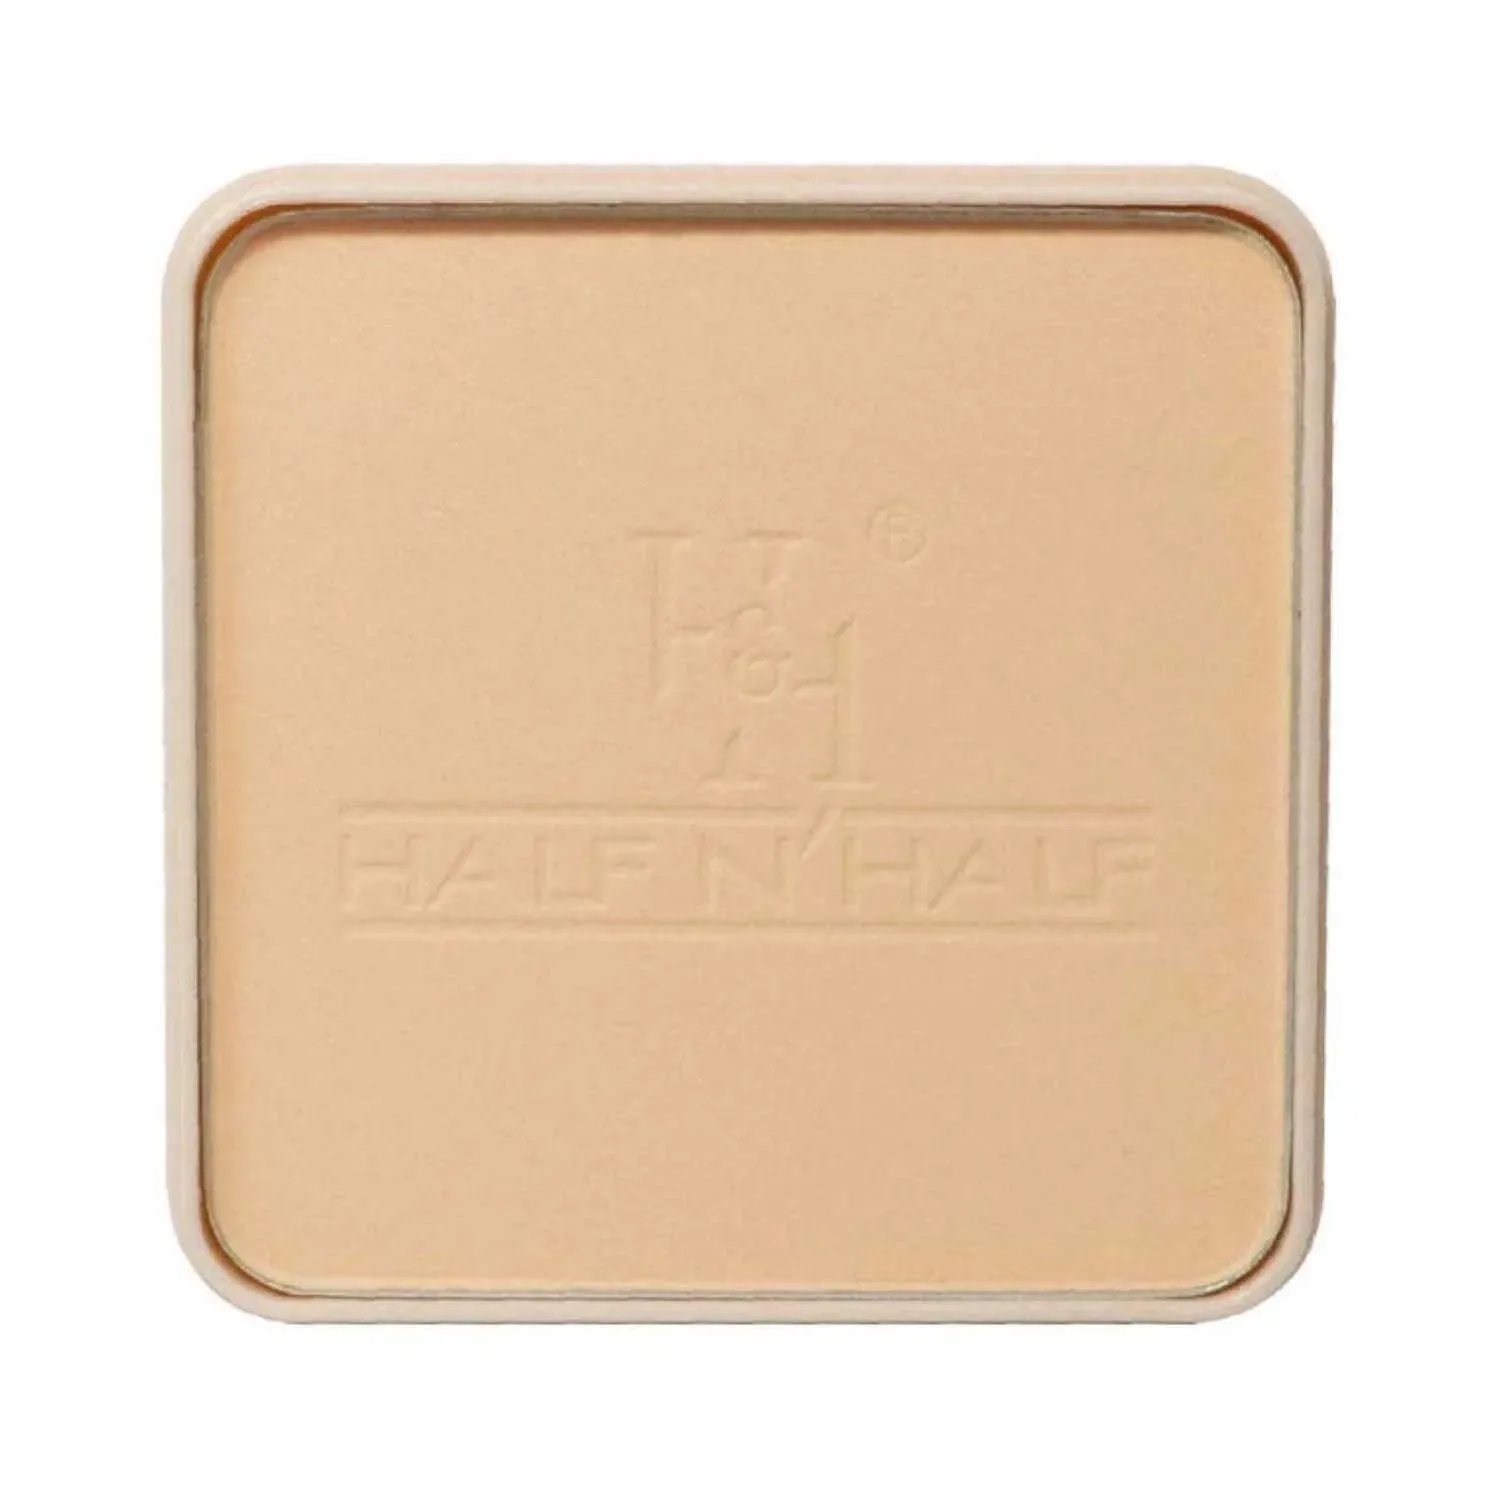 Half N Half BB Mineral Powder Vitamins Skin Whitening Compact - 03 Neutral (20g)